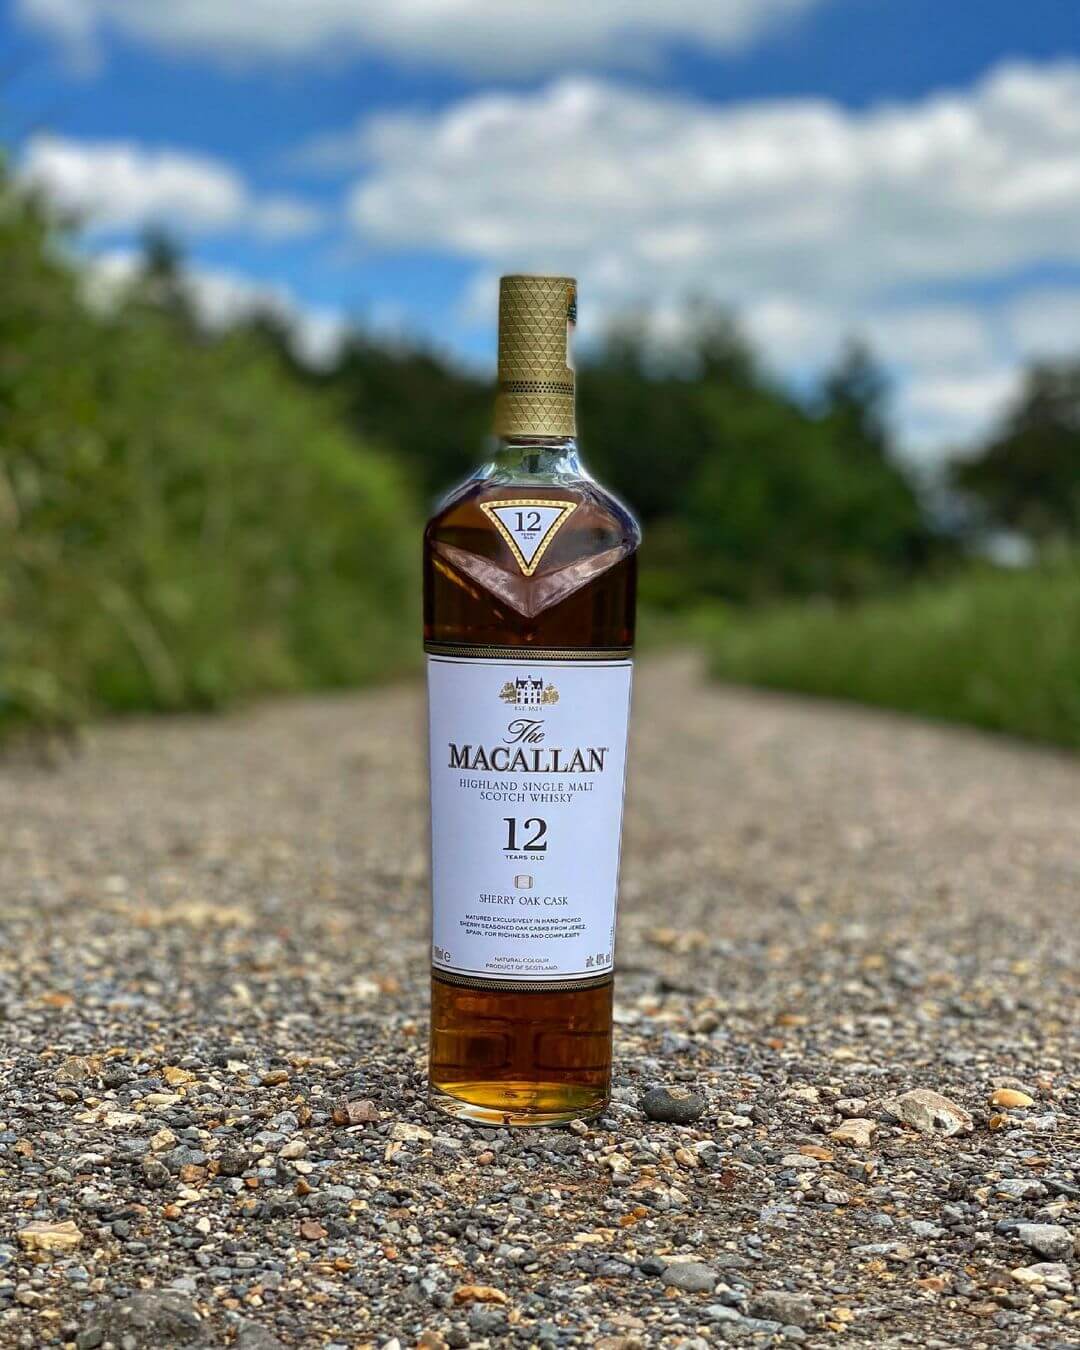 The Macallan 12 Sherry Oak Cask Highland Single Malt Scotch Whisky